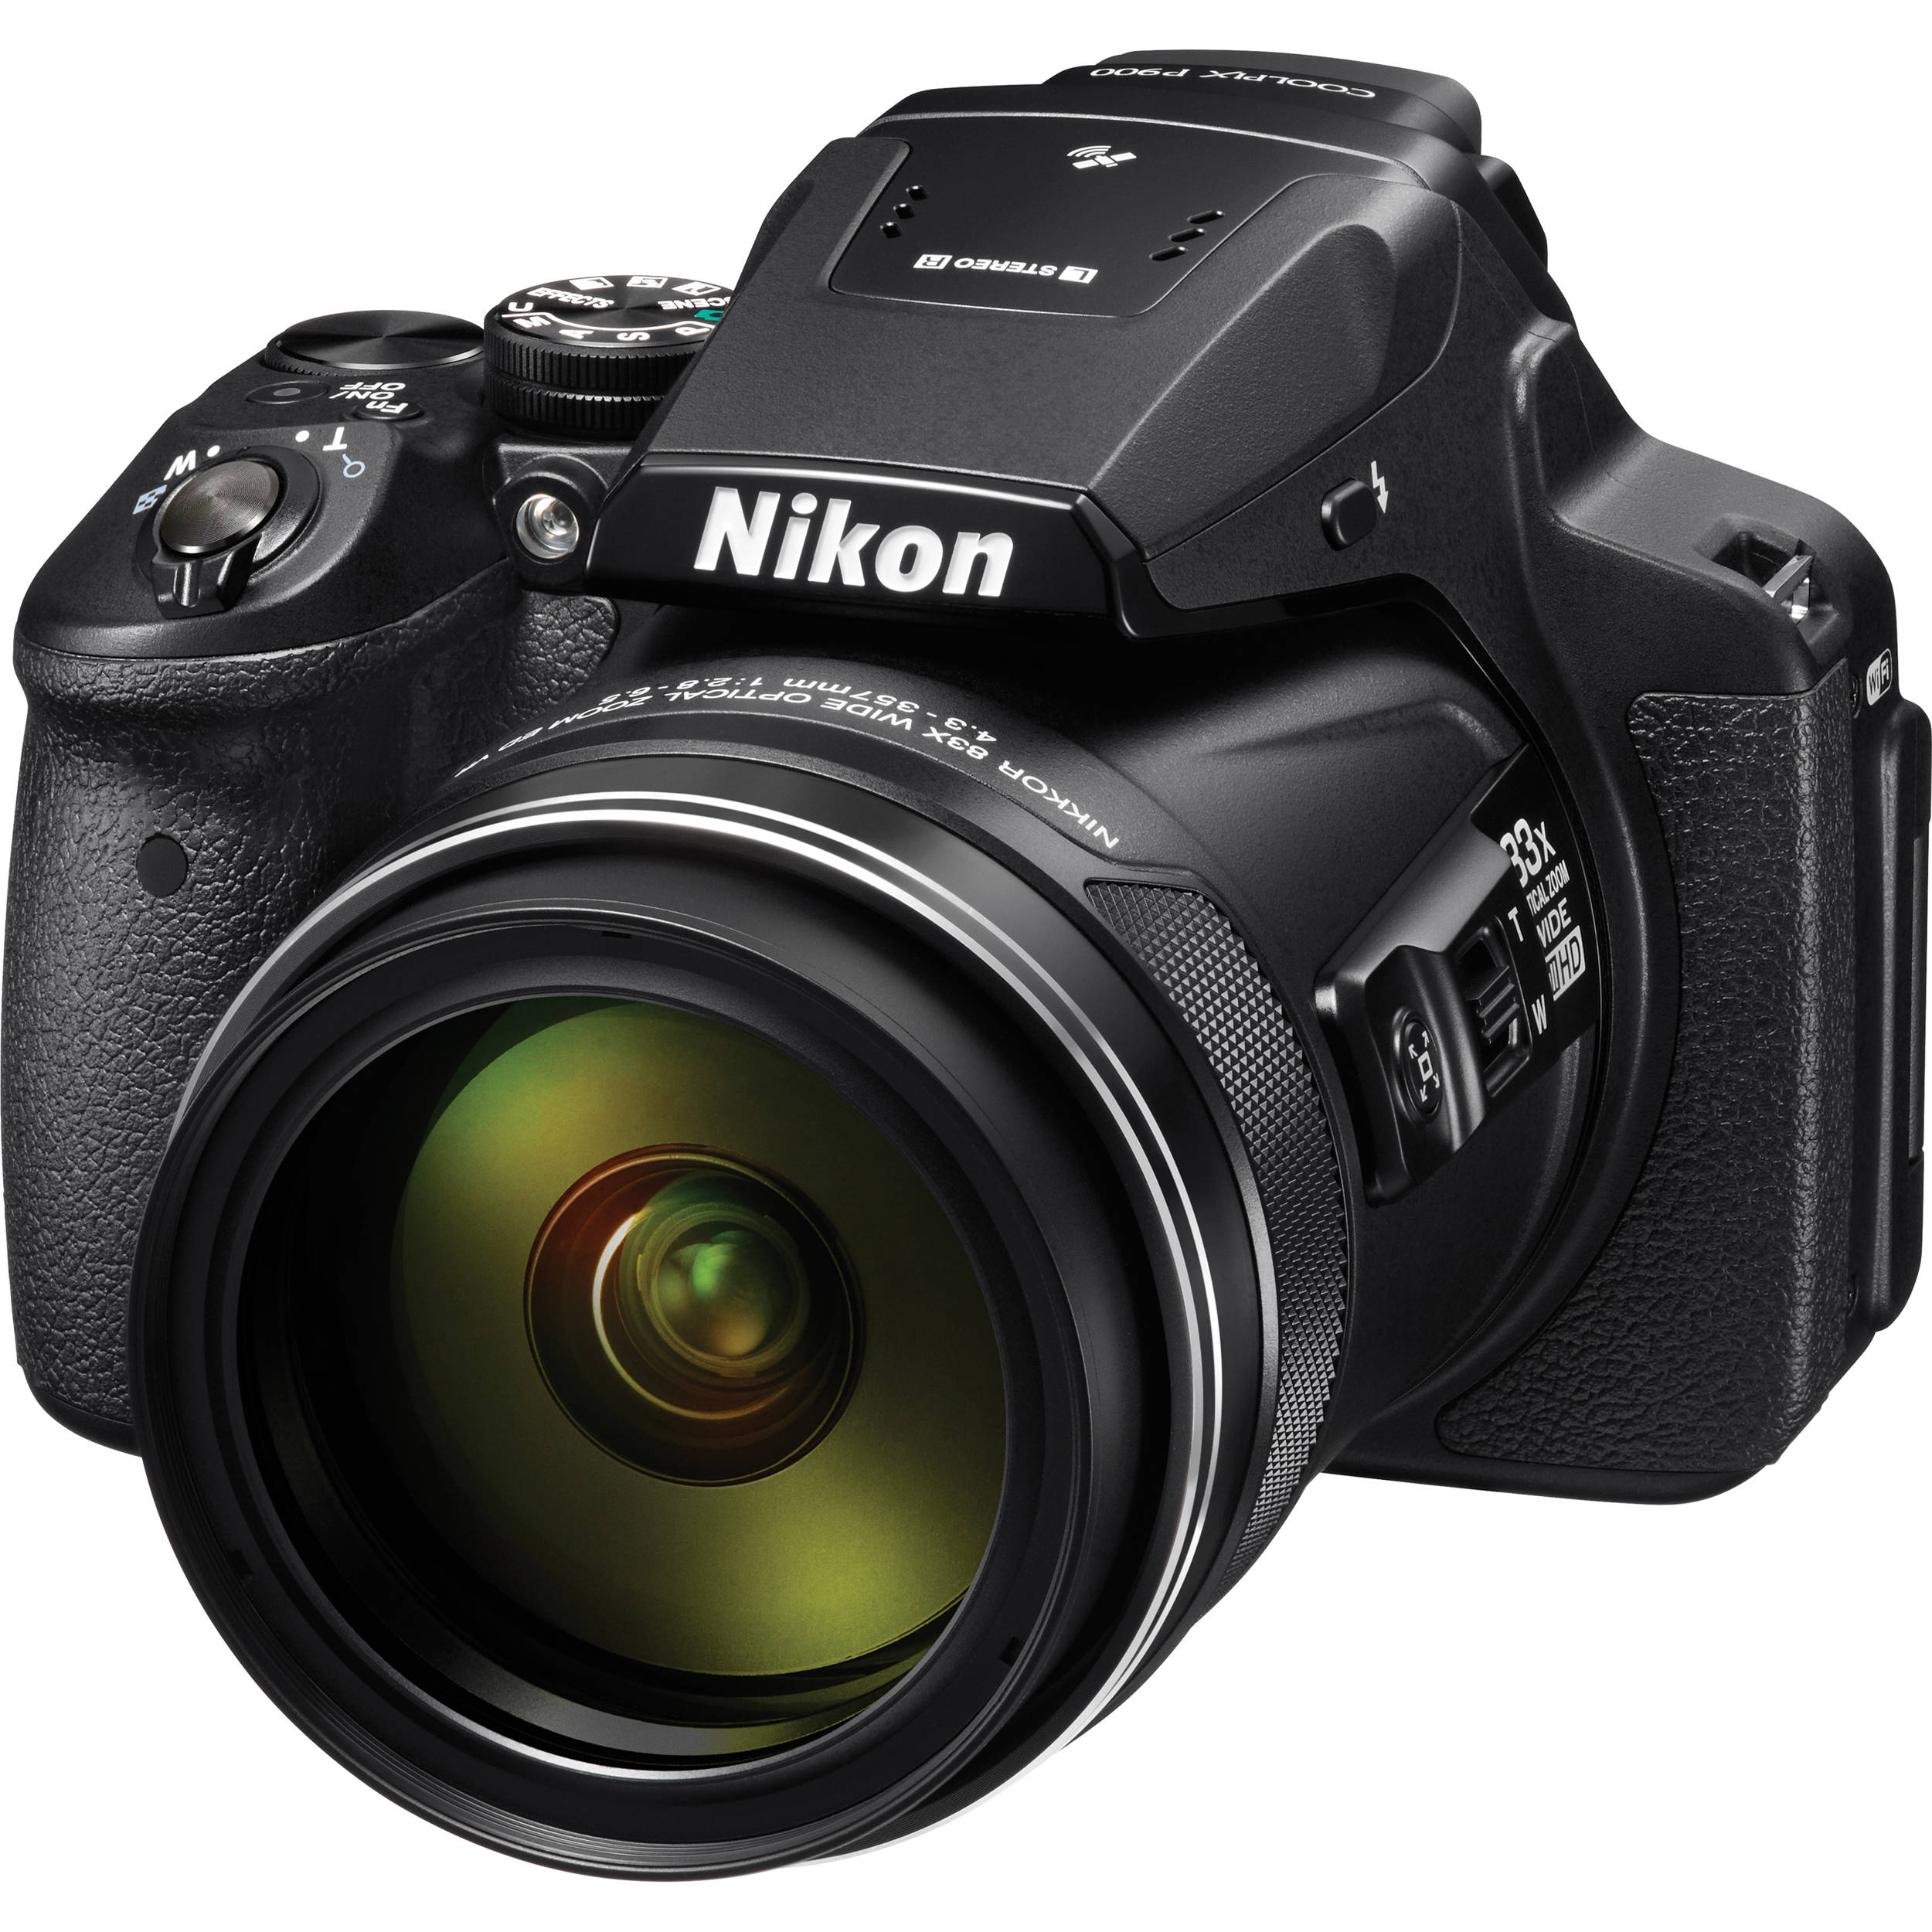 p900, best professional zoom camera, best nikon zoom